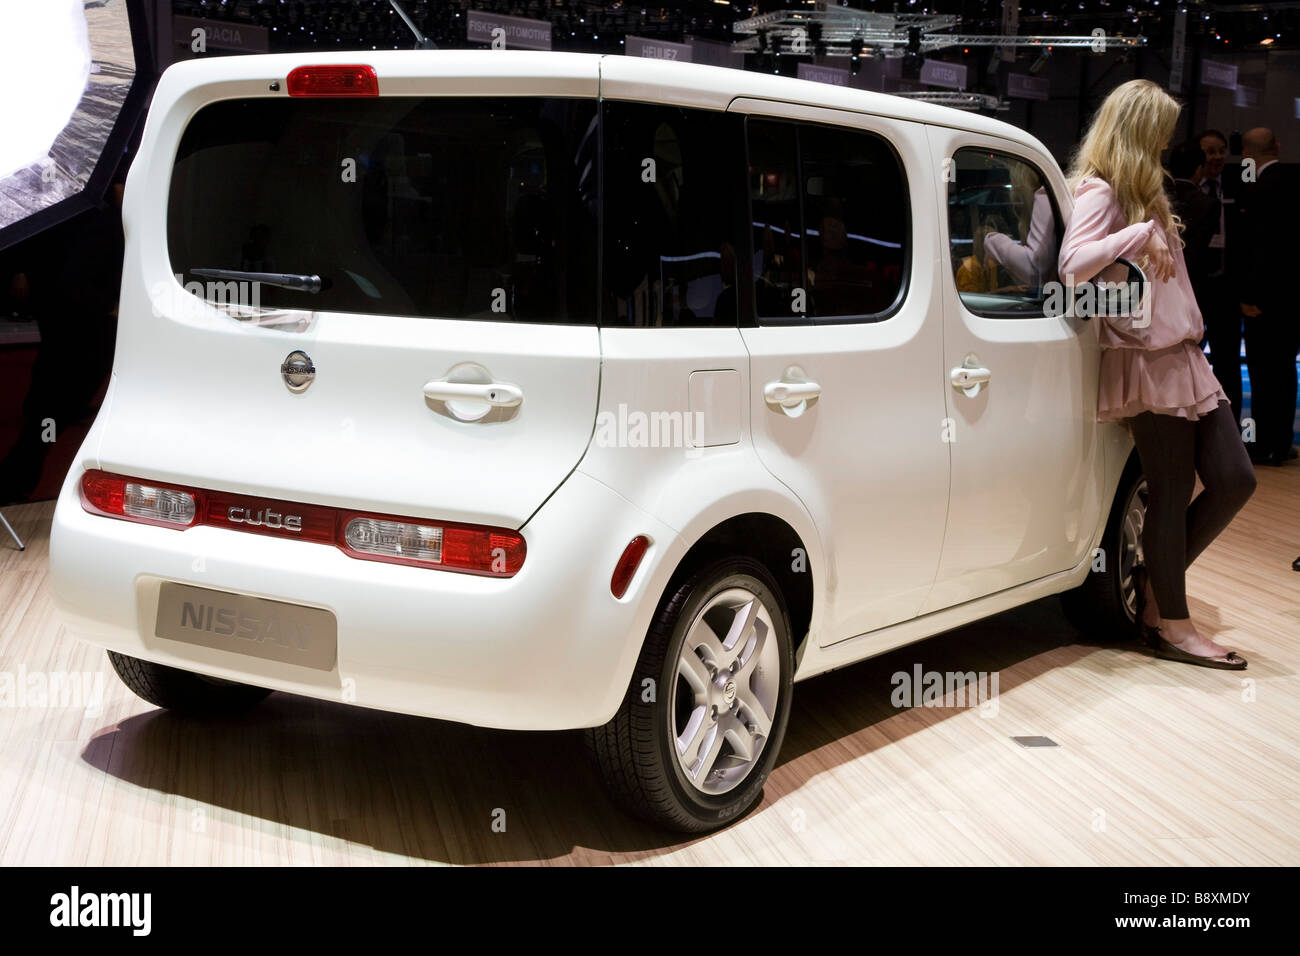 Nissan cube illustré lors d'un salon de l'automobile Photo Stock - Alamy